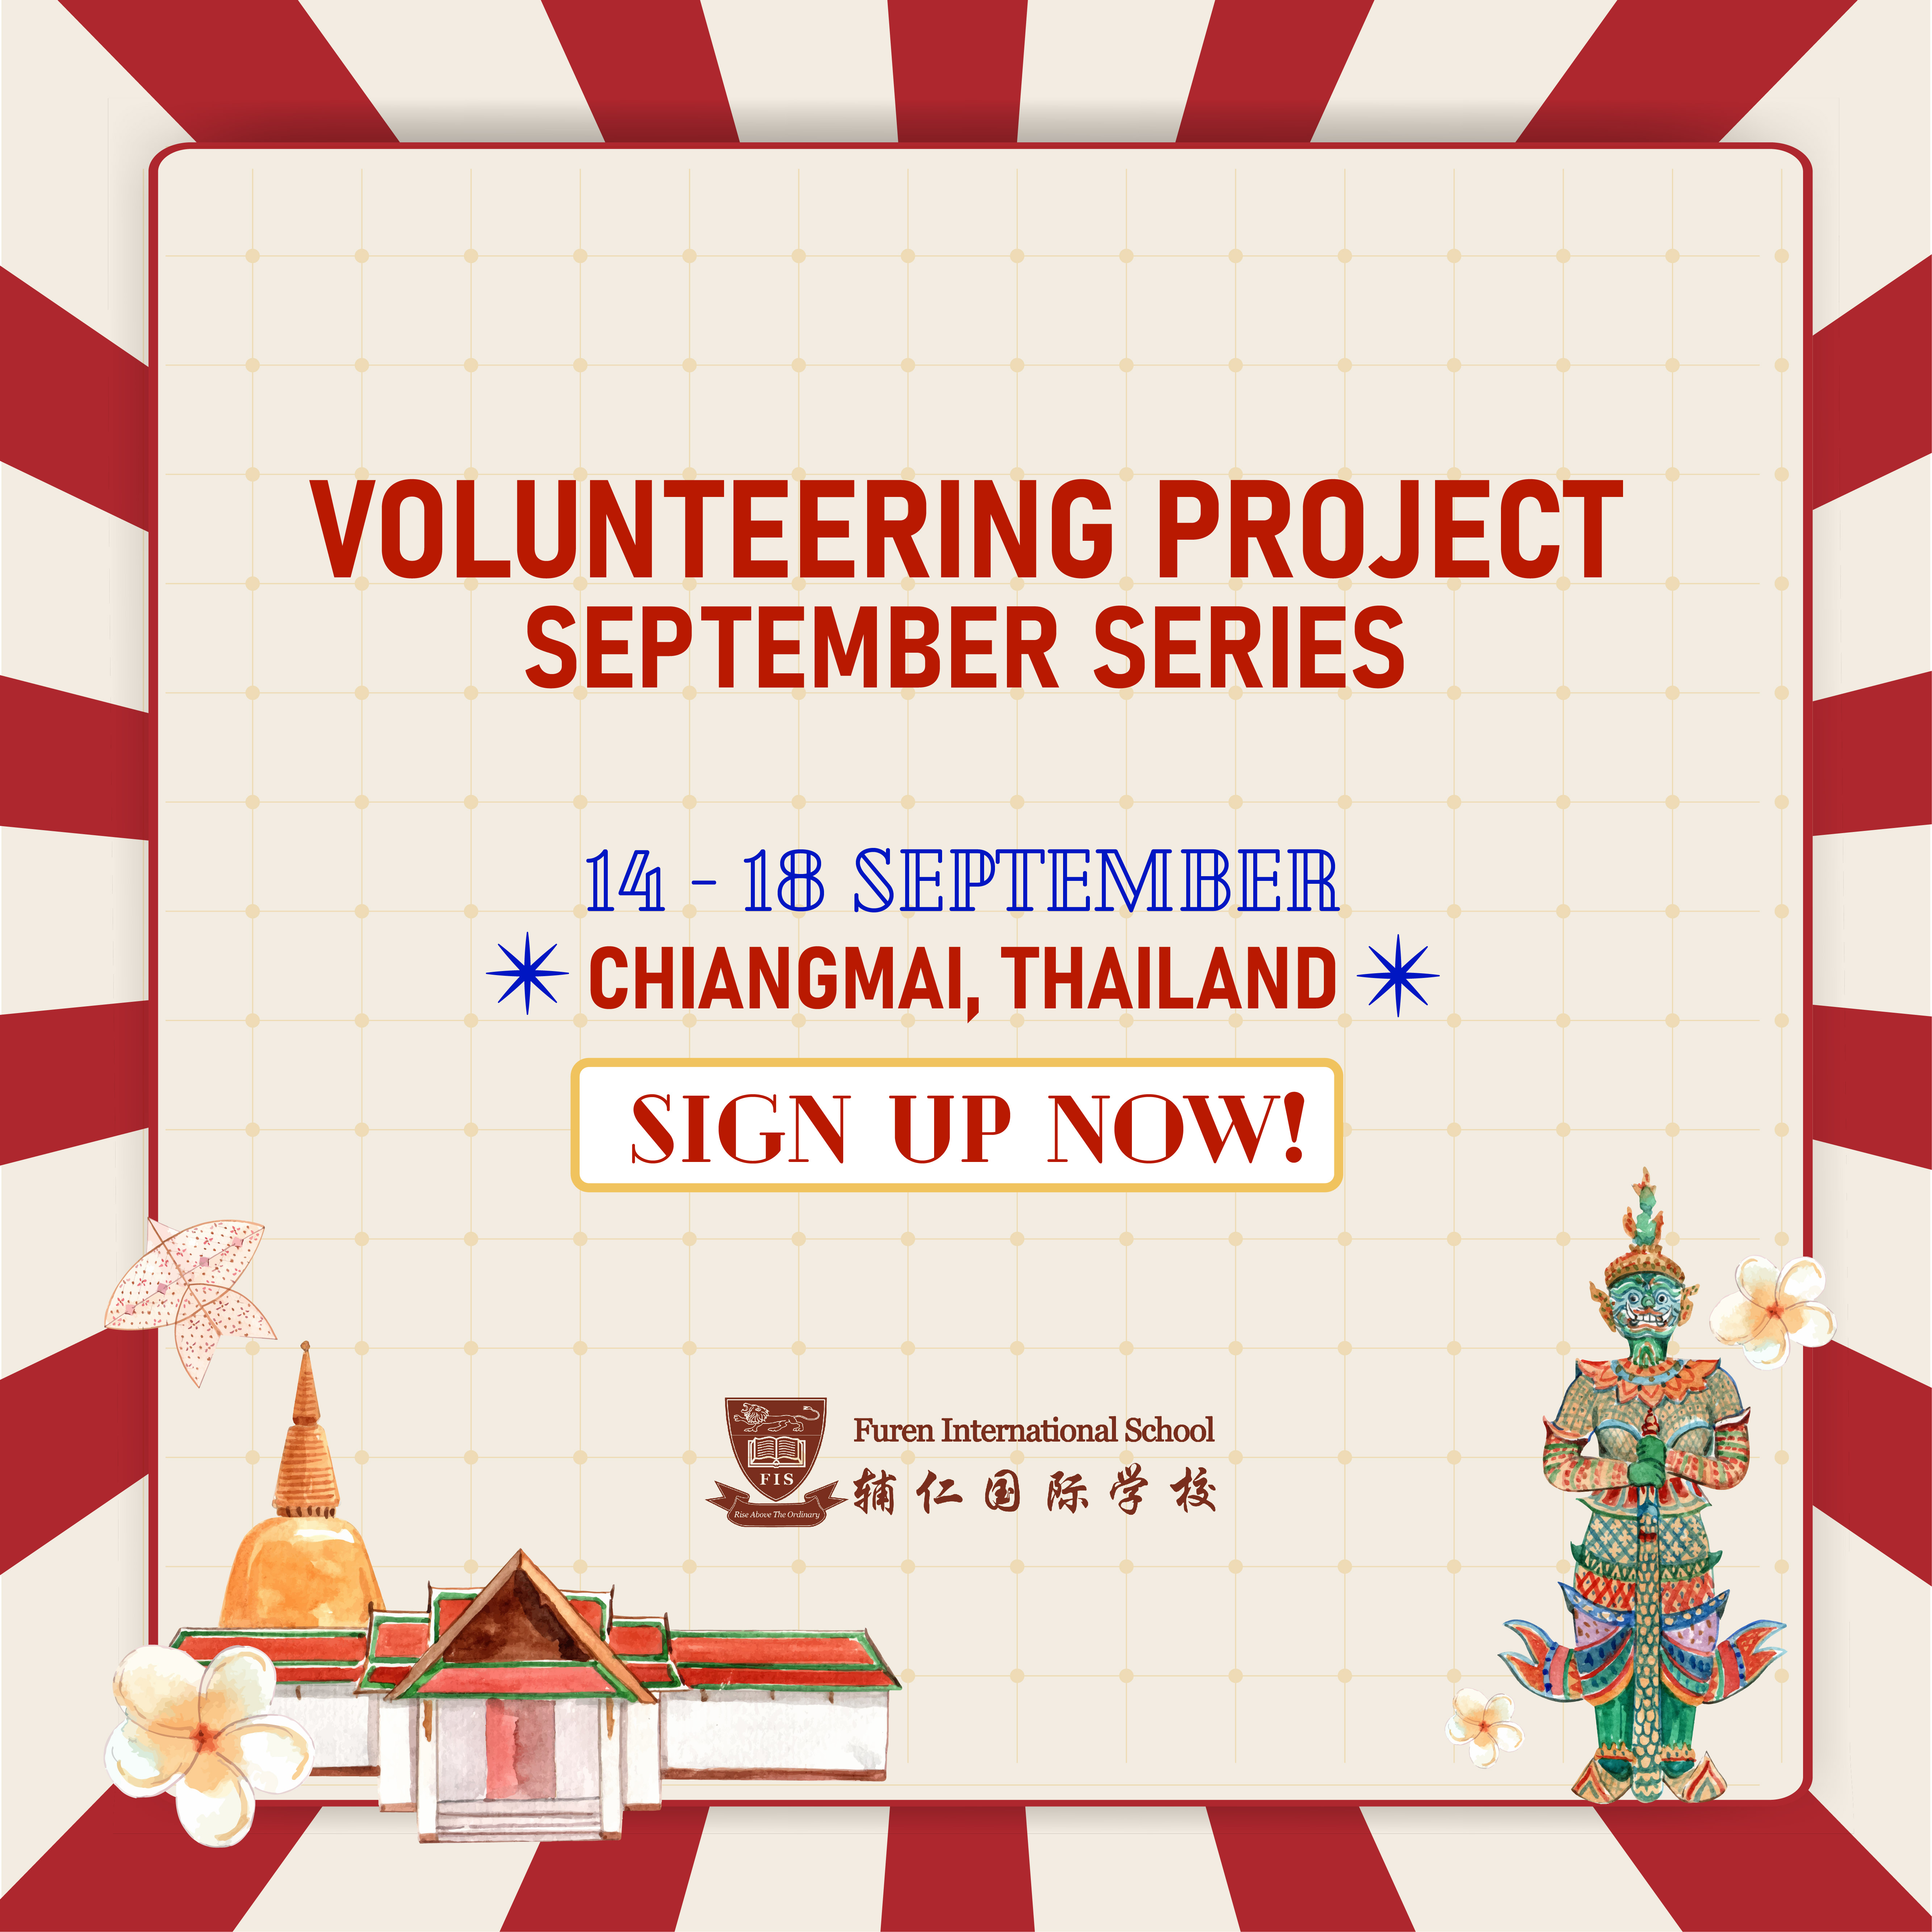 Chiangmai, Thailand Volunteering Project registration